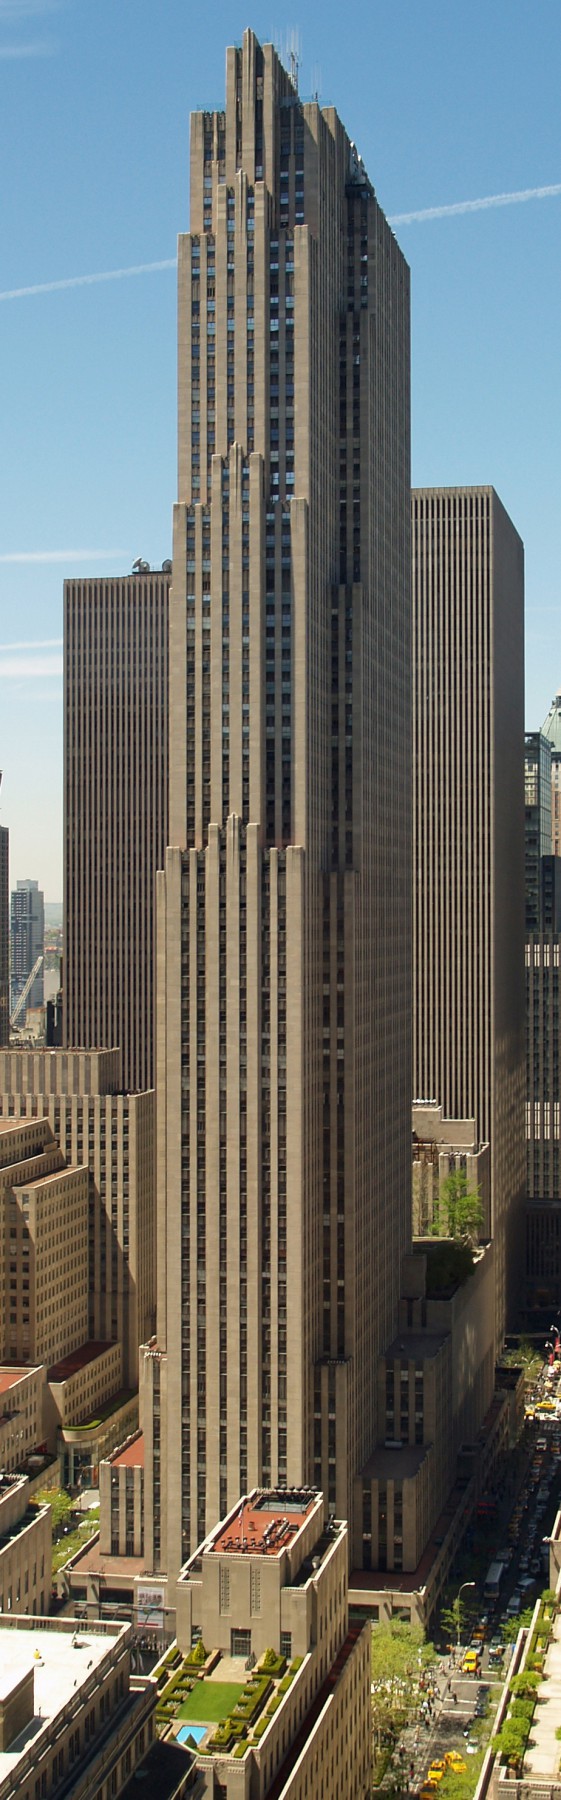 Rockefeller Centre 22 Acres Large - New York City, United States